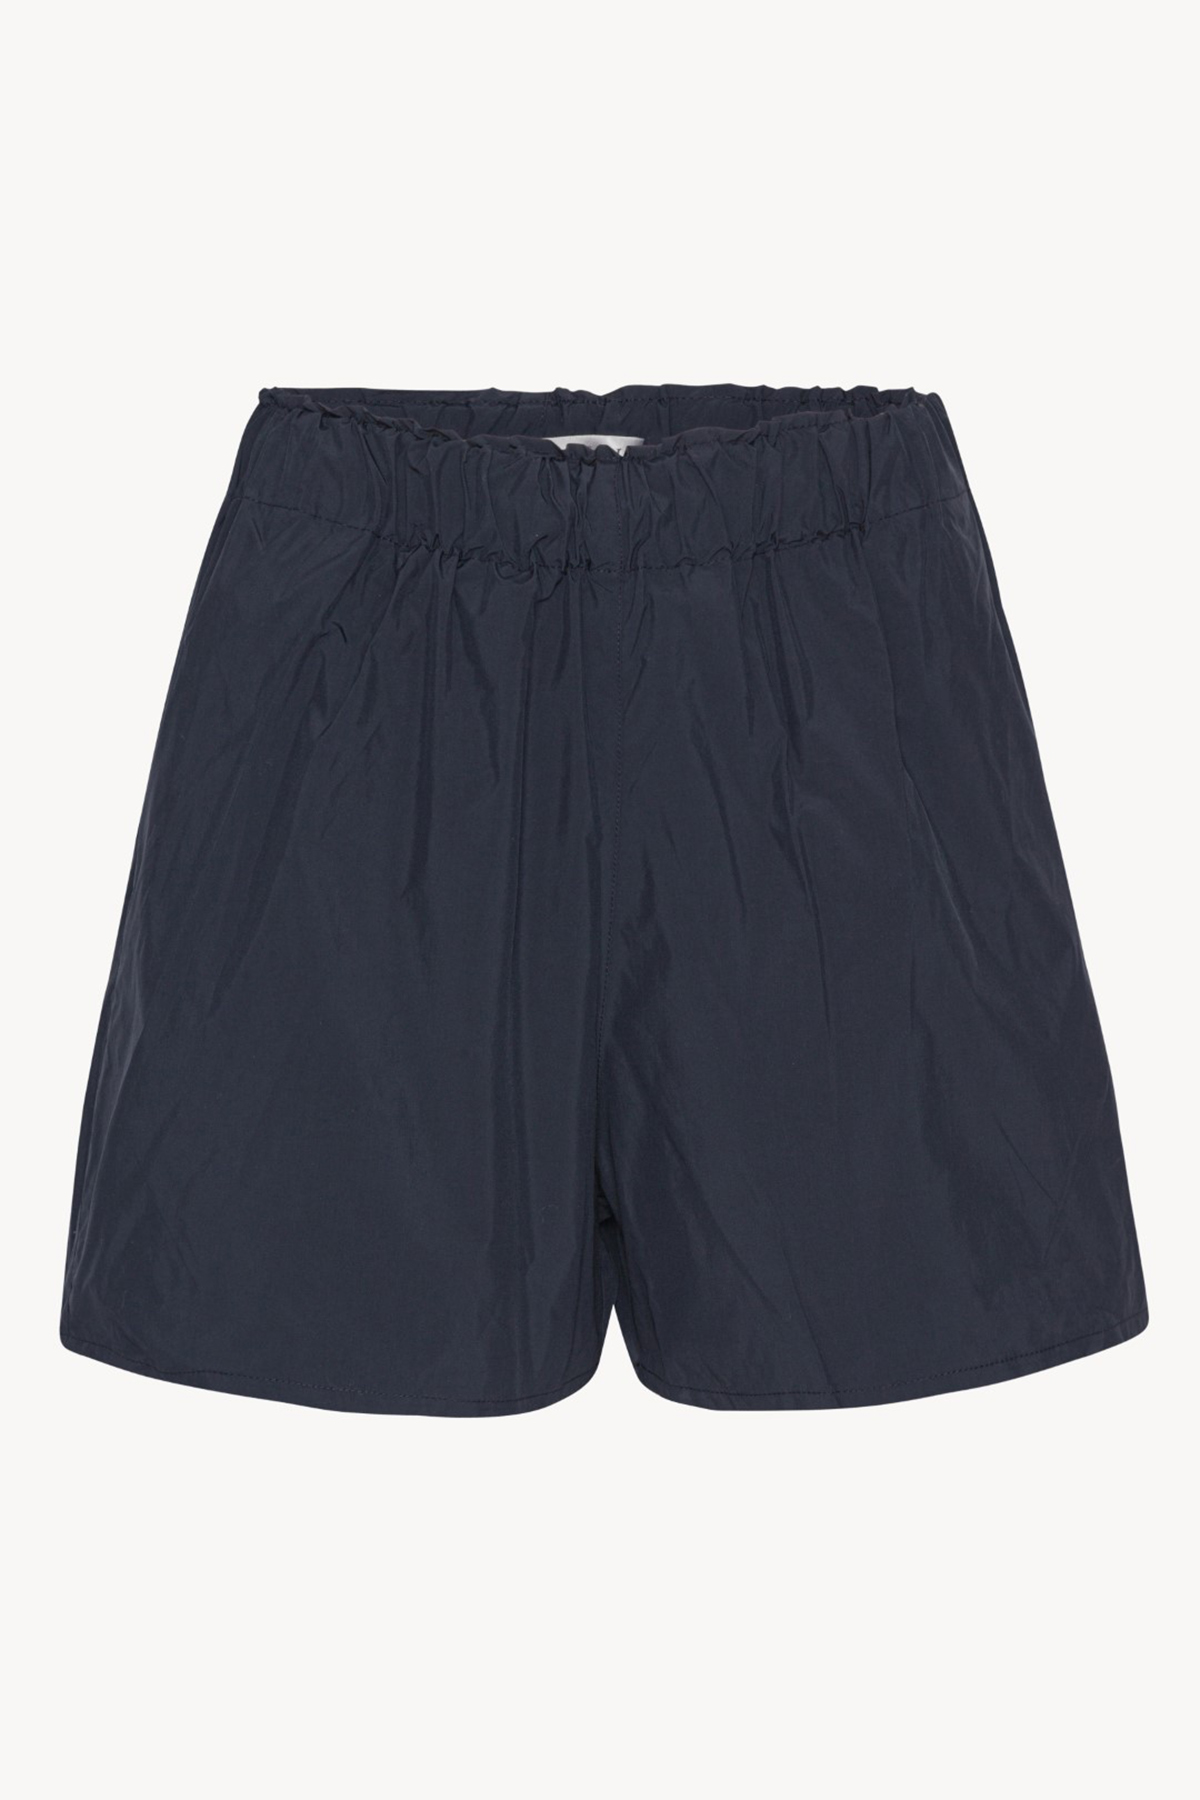 Twiggy Shorts - Navy